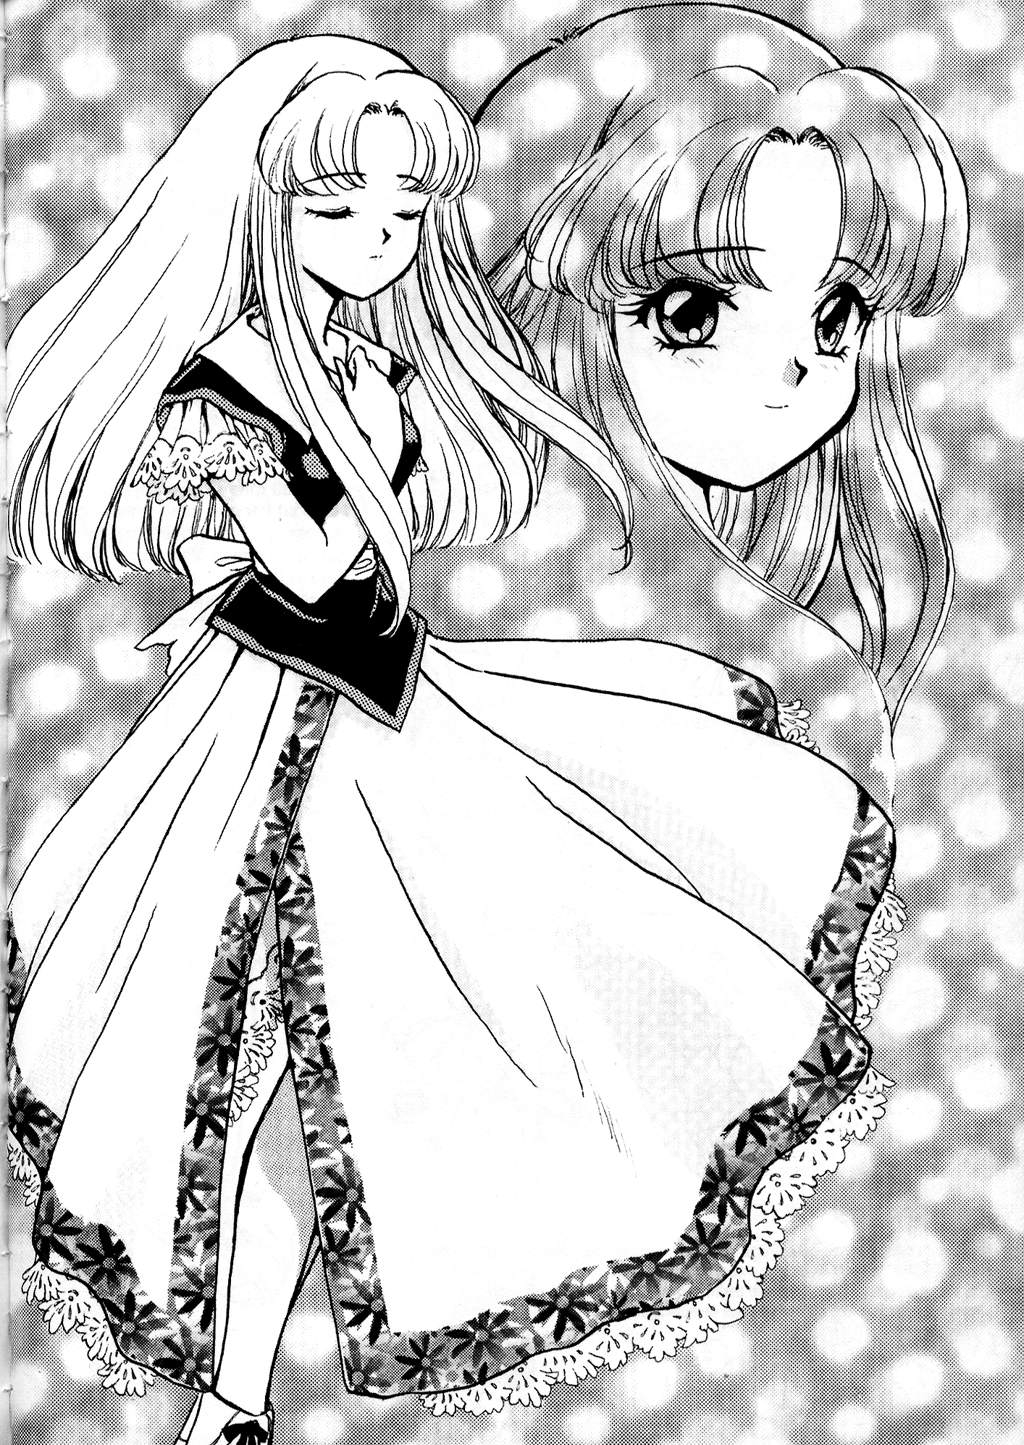 Le dessin du Manga 04 - Personnages feminin, Attitudes, Expressions numero d'image 117